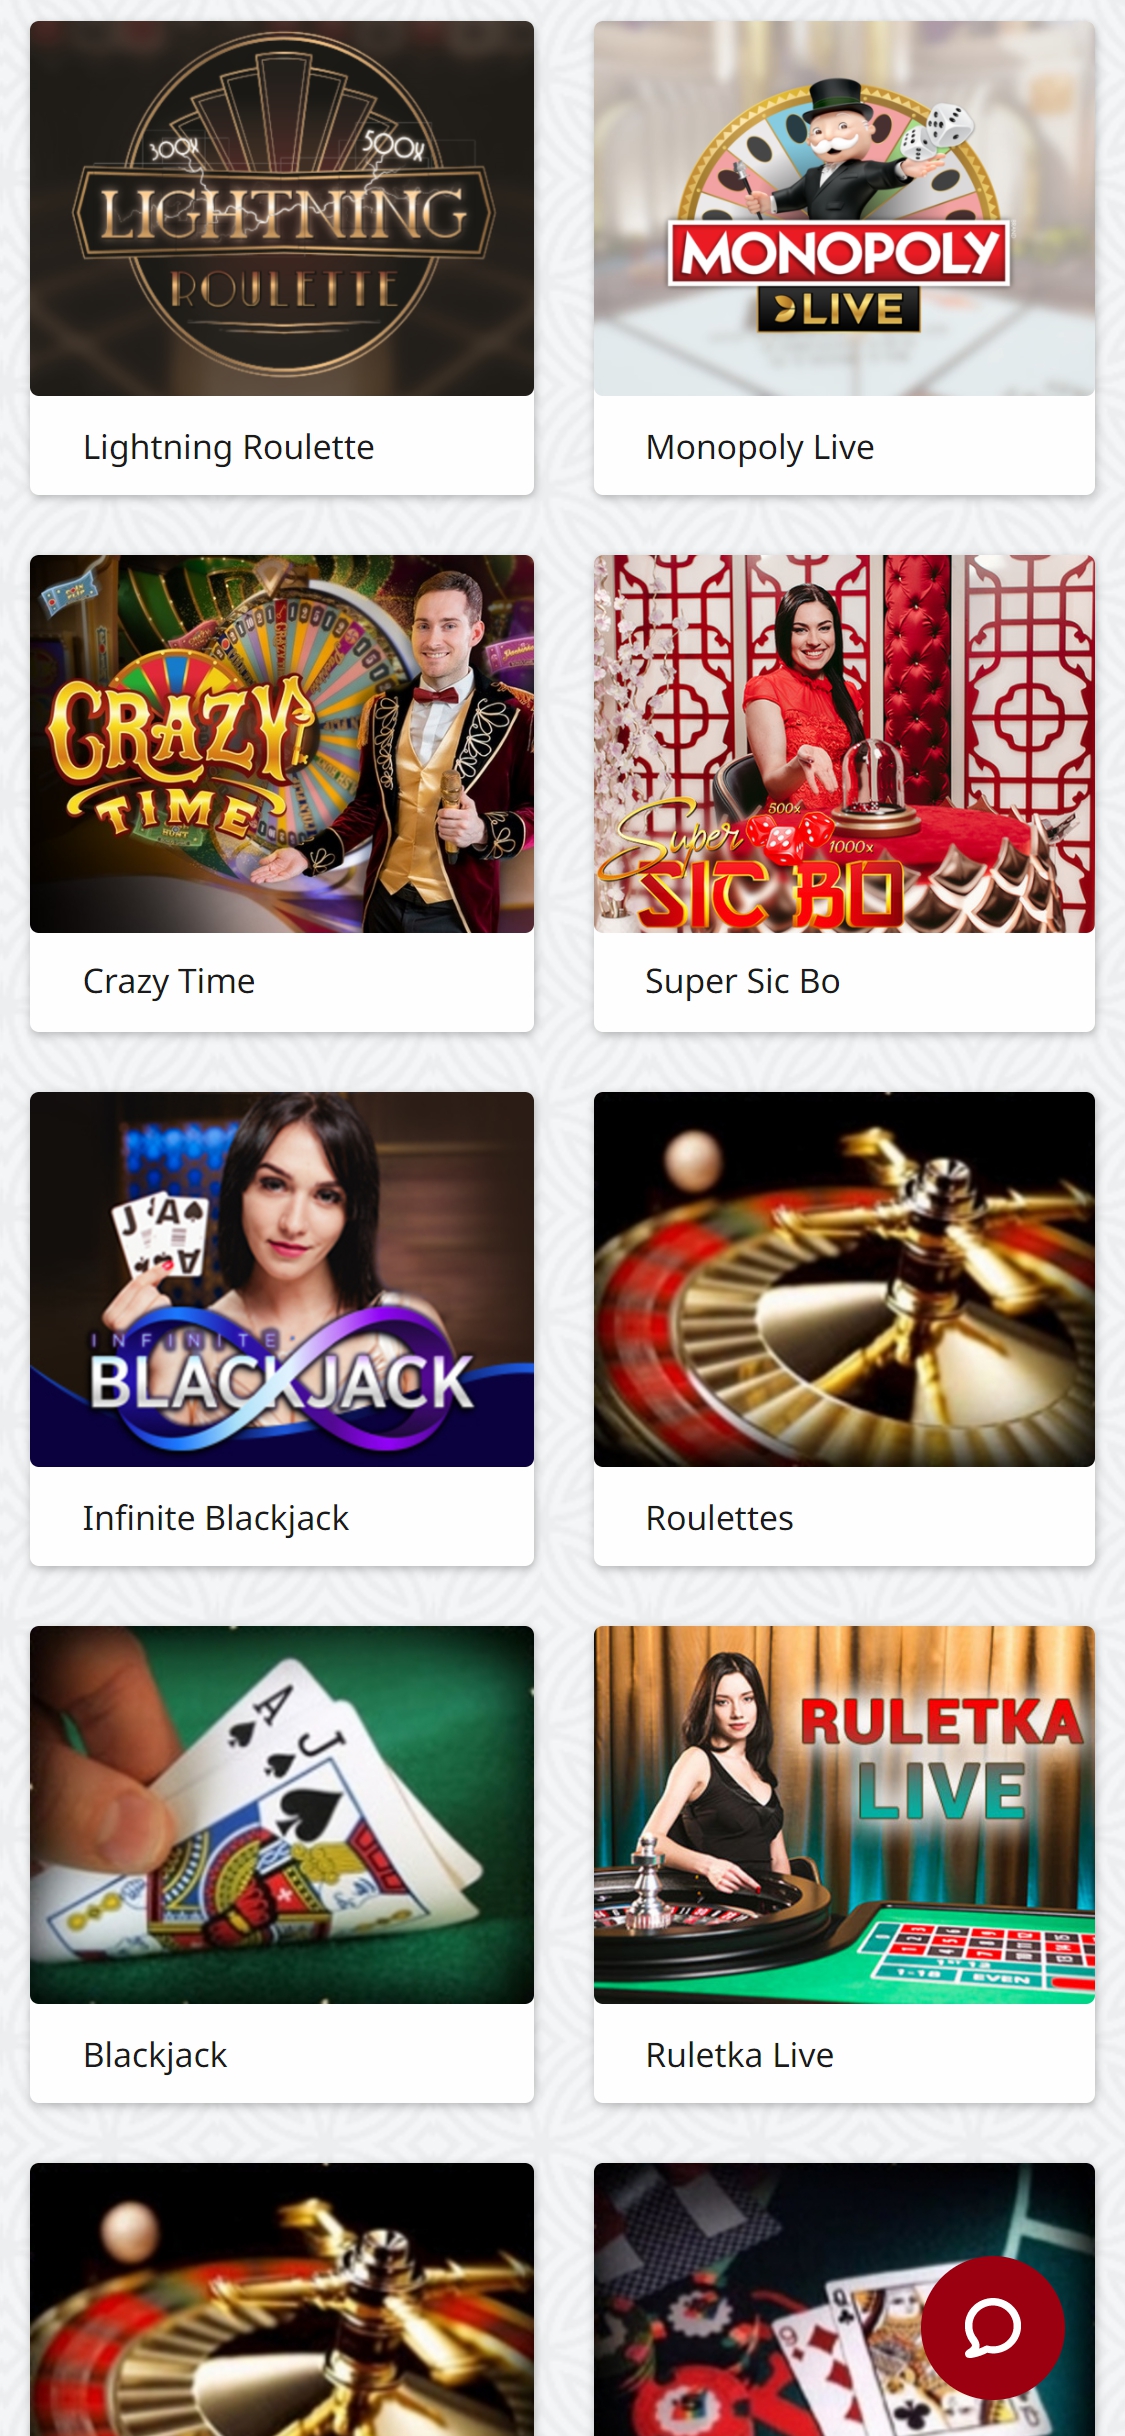 Red Star Poker Casino Mobile Live Dealer Games Review